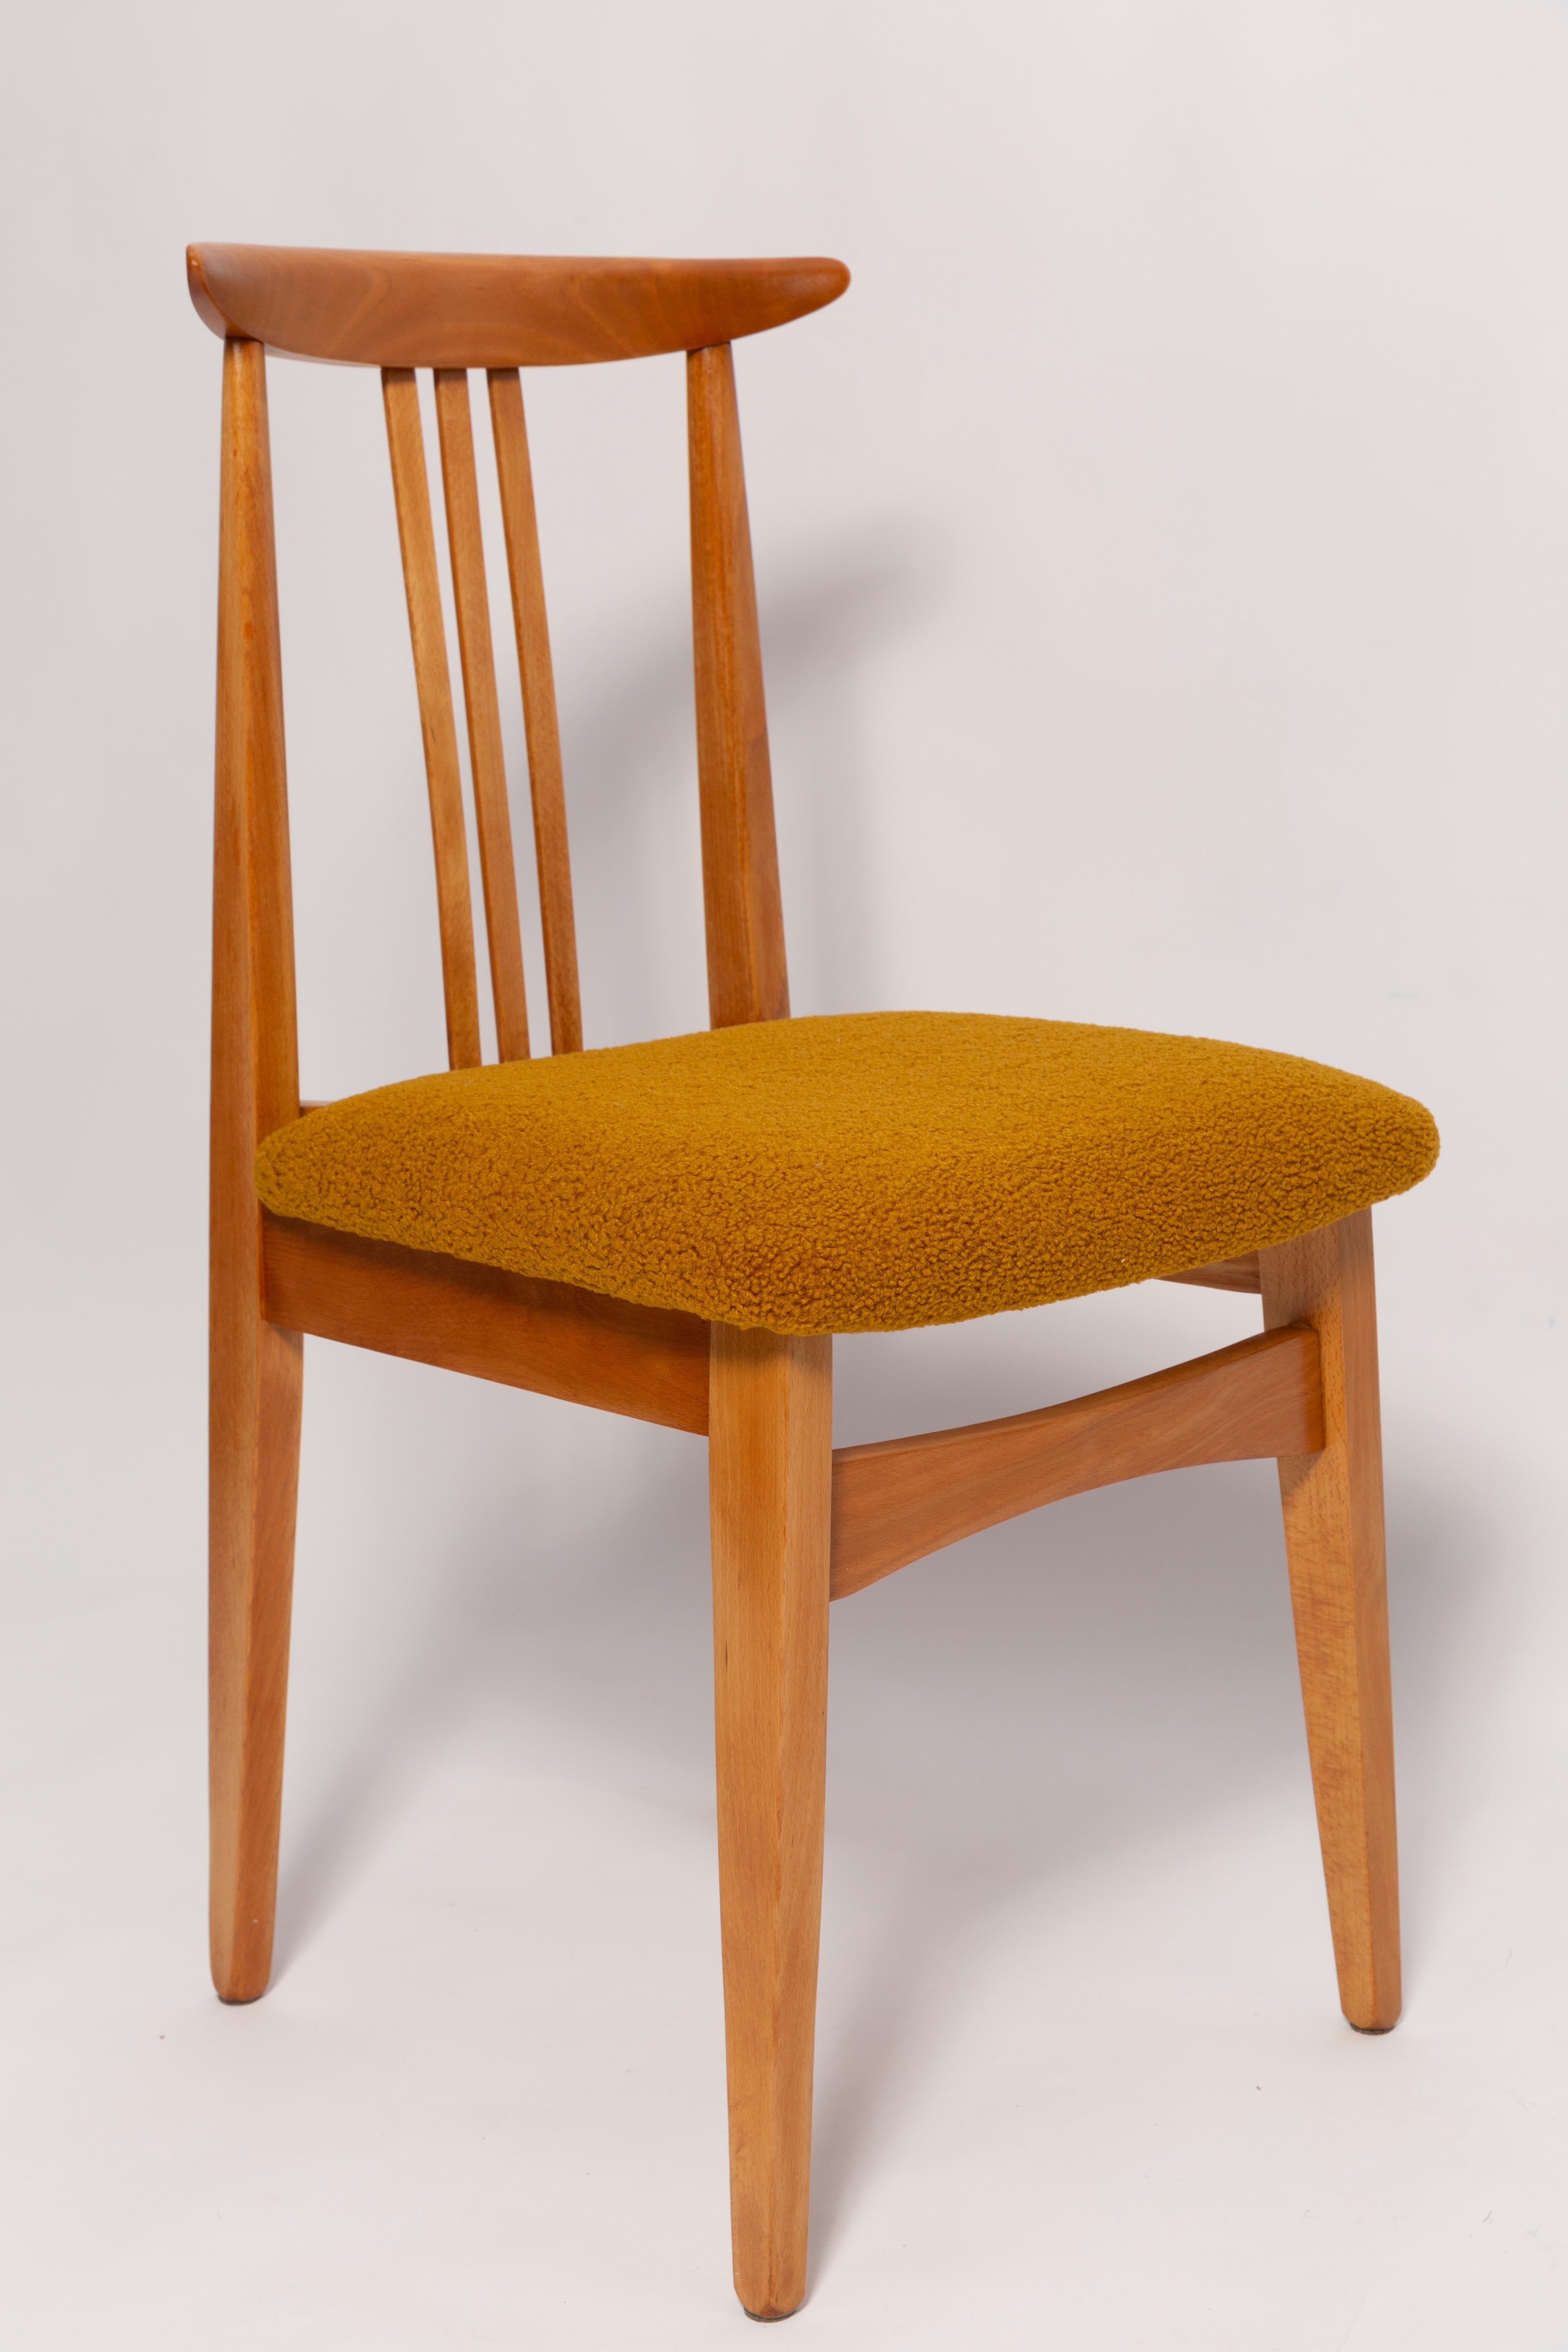 Bouclé Mid-Century Ochre Boucle Chair, Light Wood, M. Zielinski, Europe 1960s For Sale